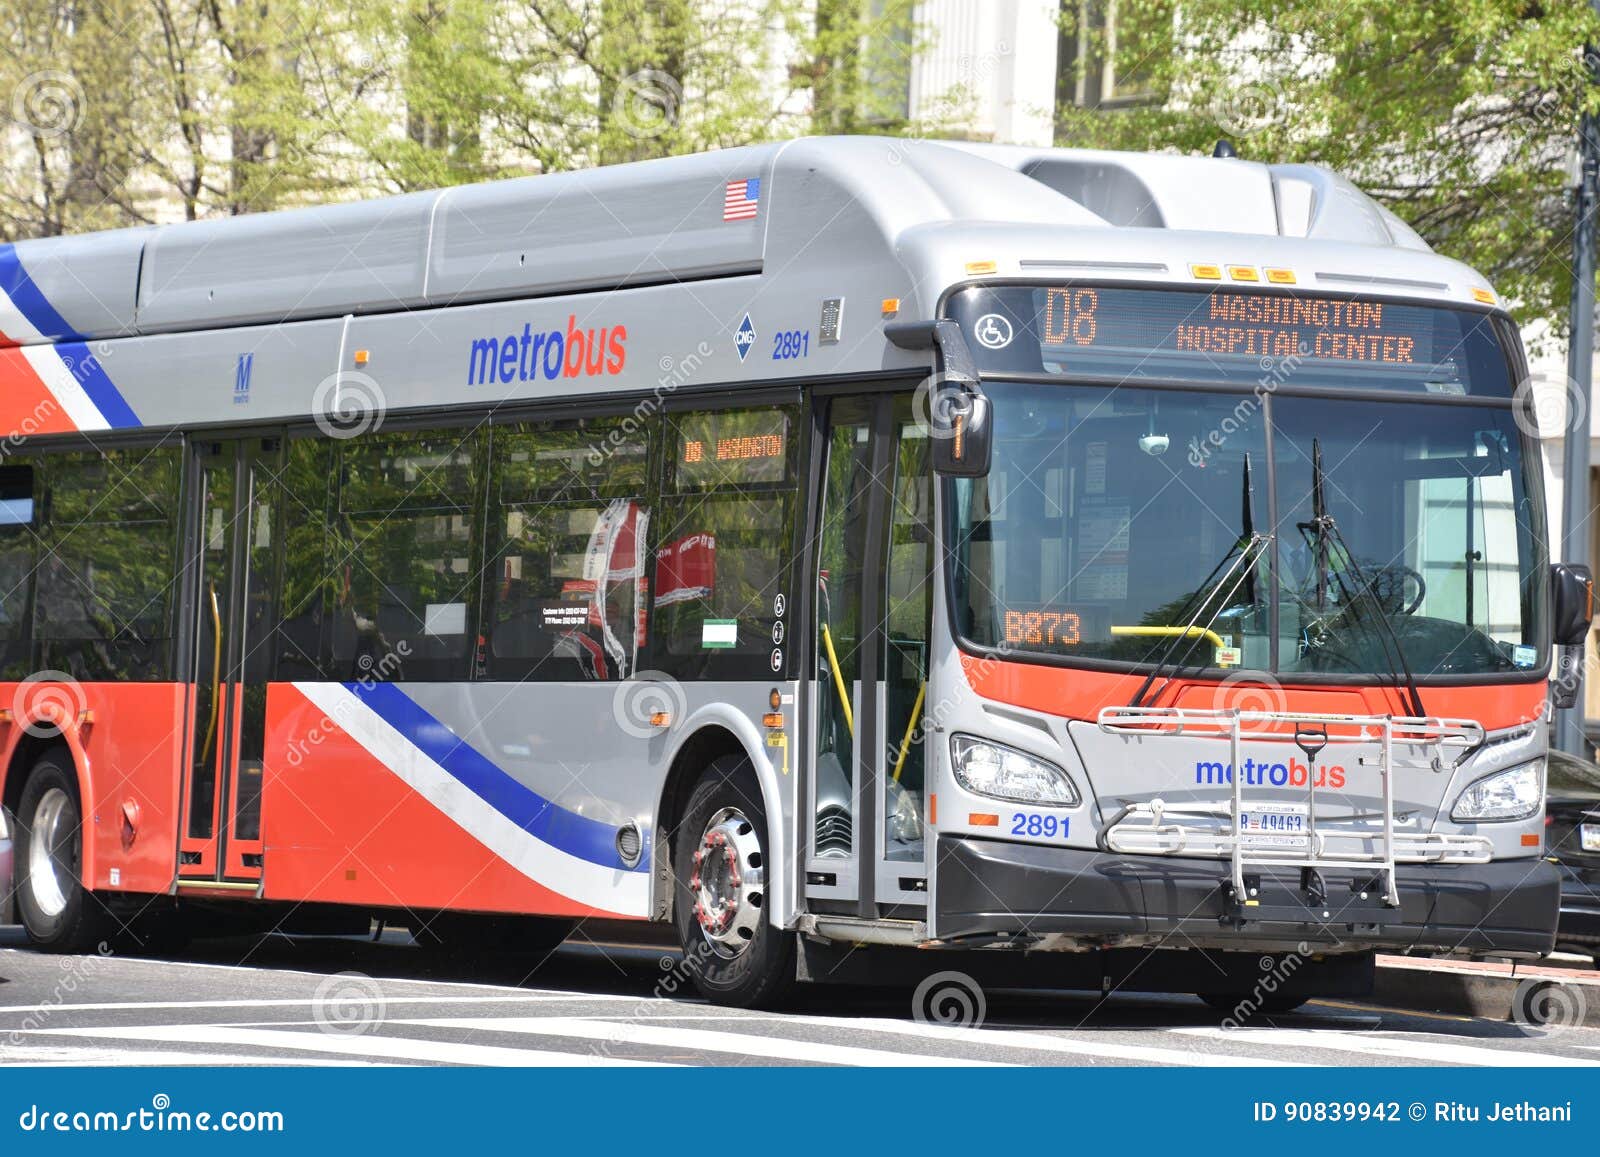 Metro Bus in Washington, DC Editorial Photography - Image of parking ...